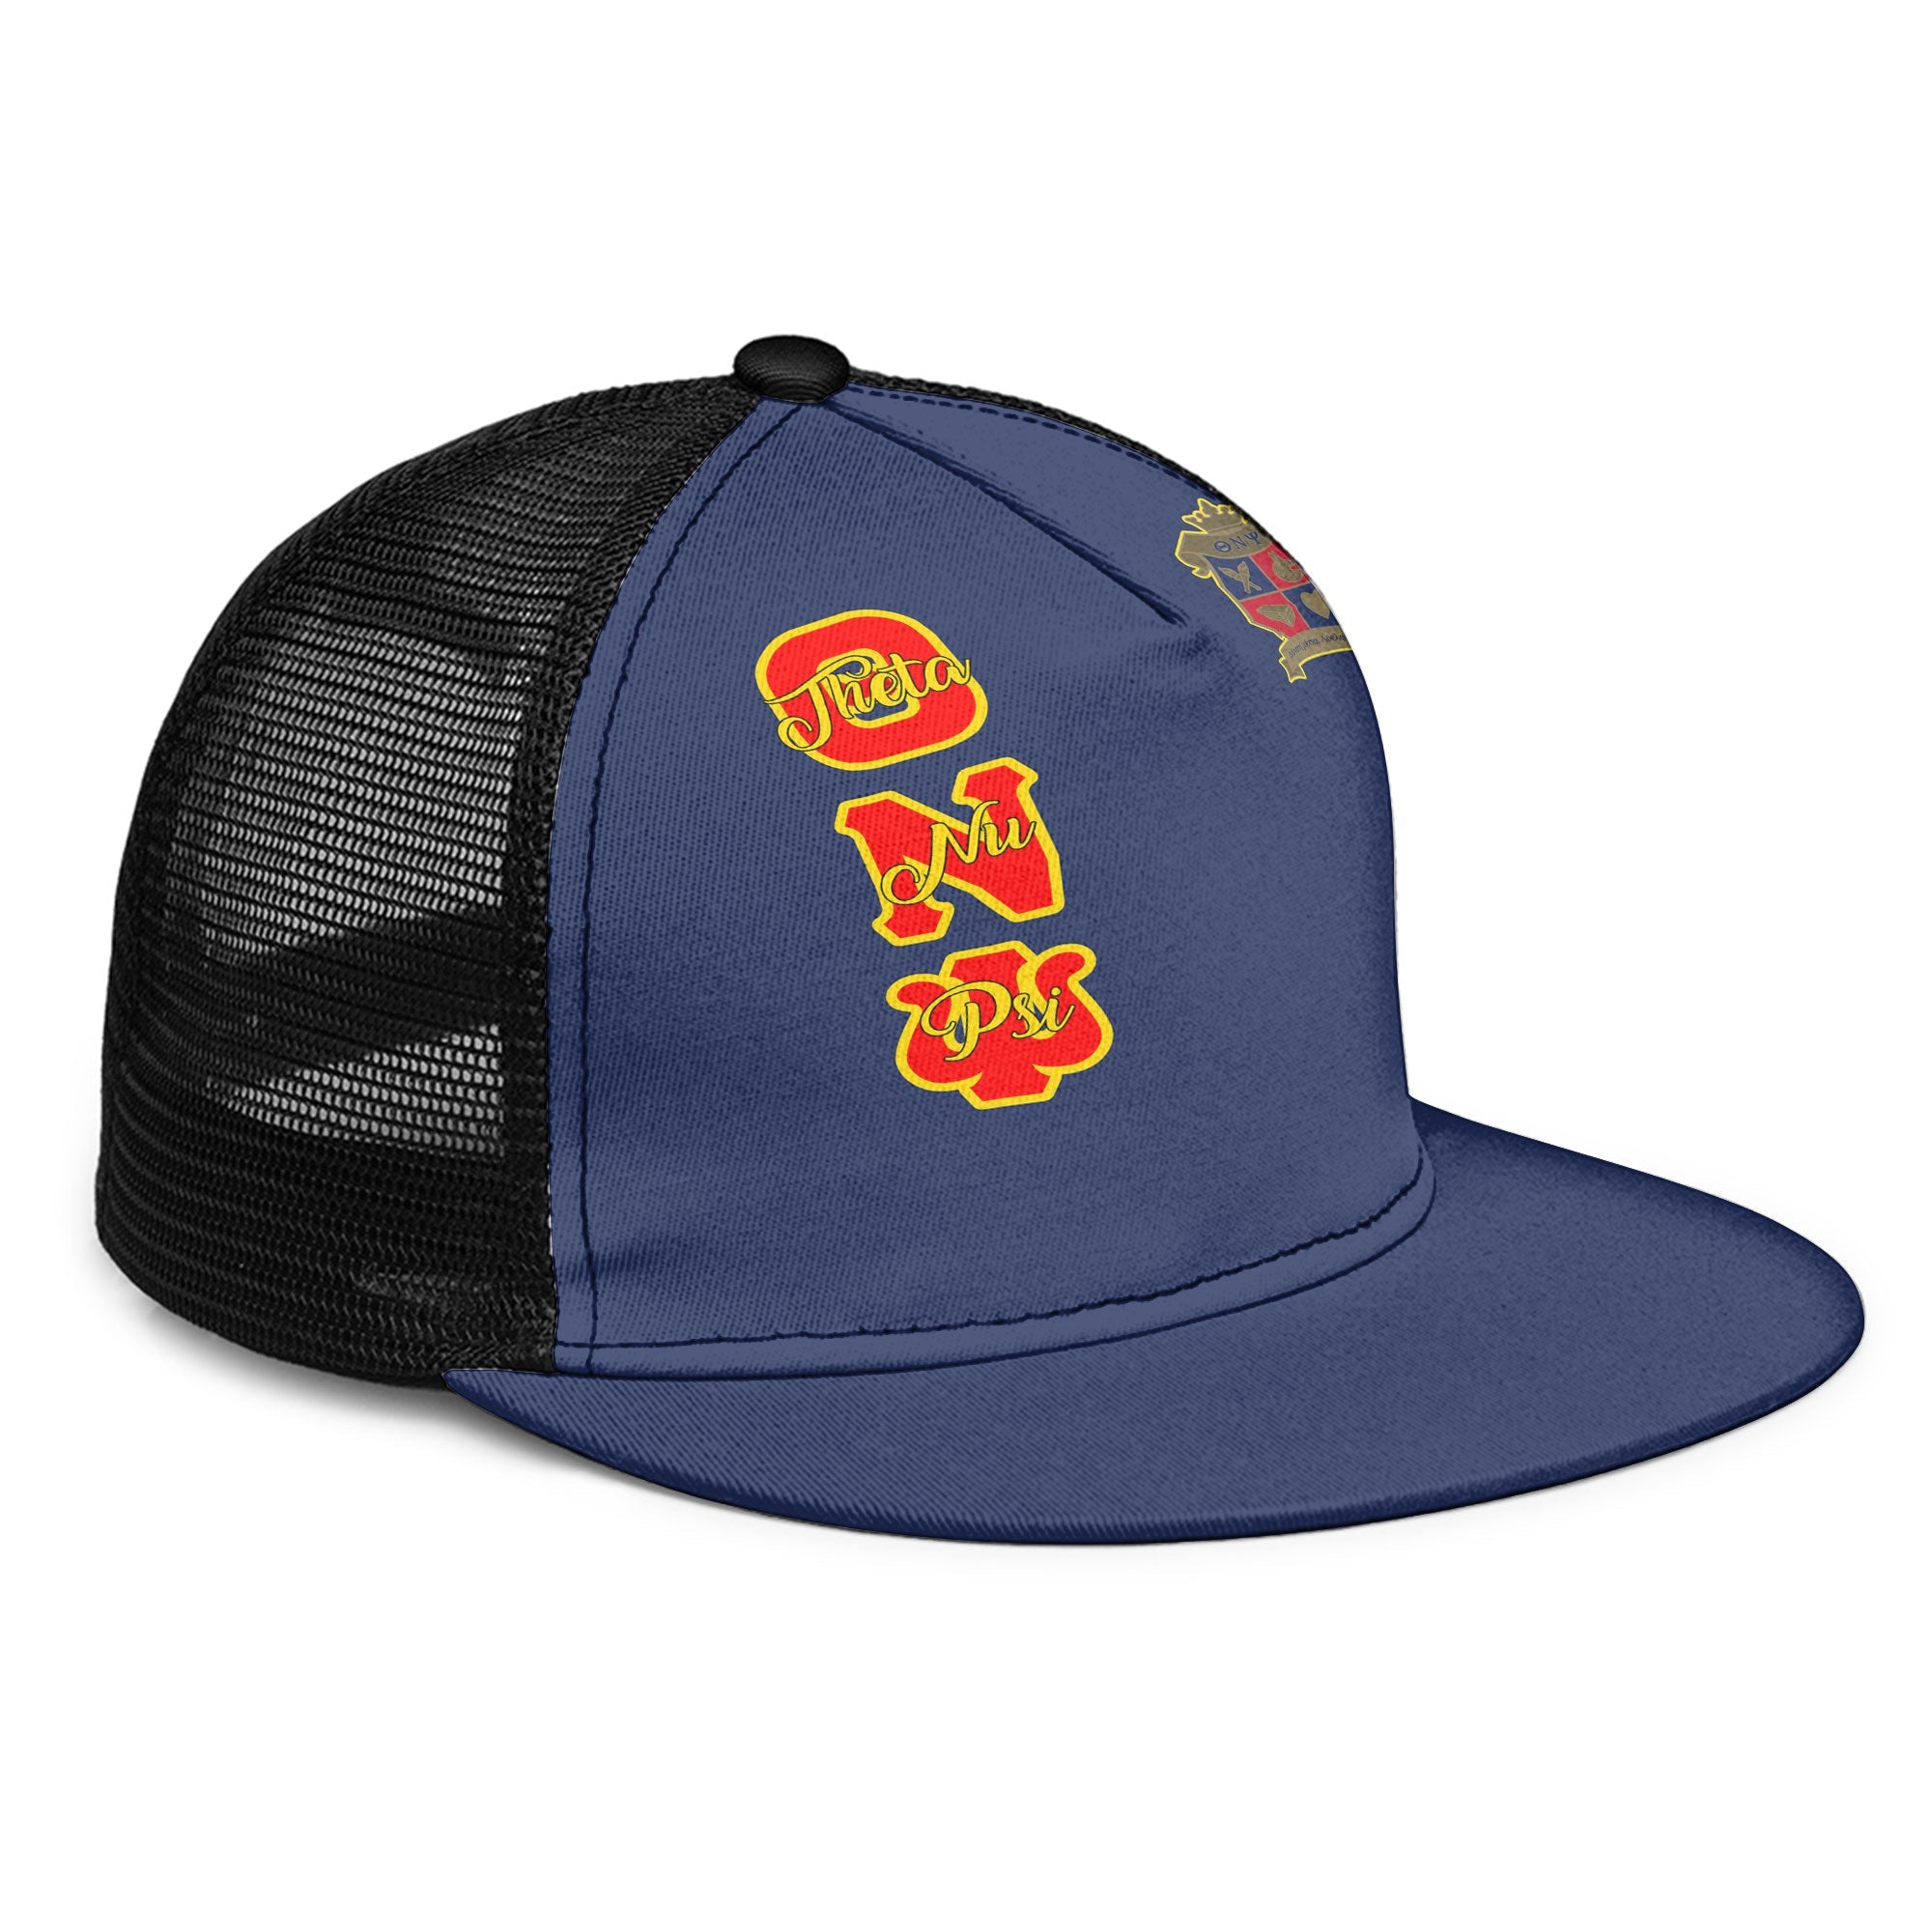 Fraternity Trucker Hat - Theta Nu Psi Trucker Hat Original Blue Style